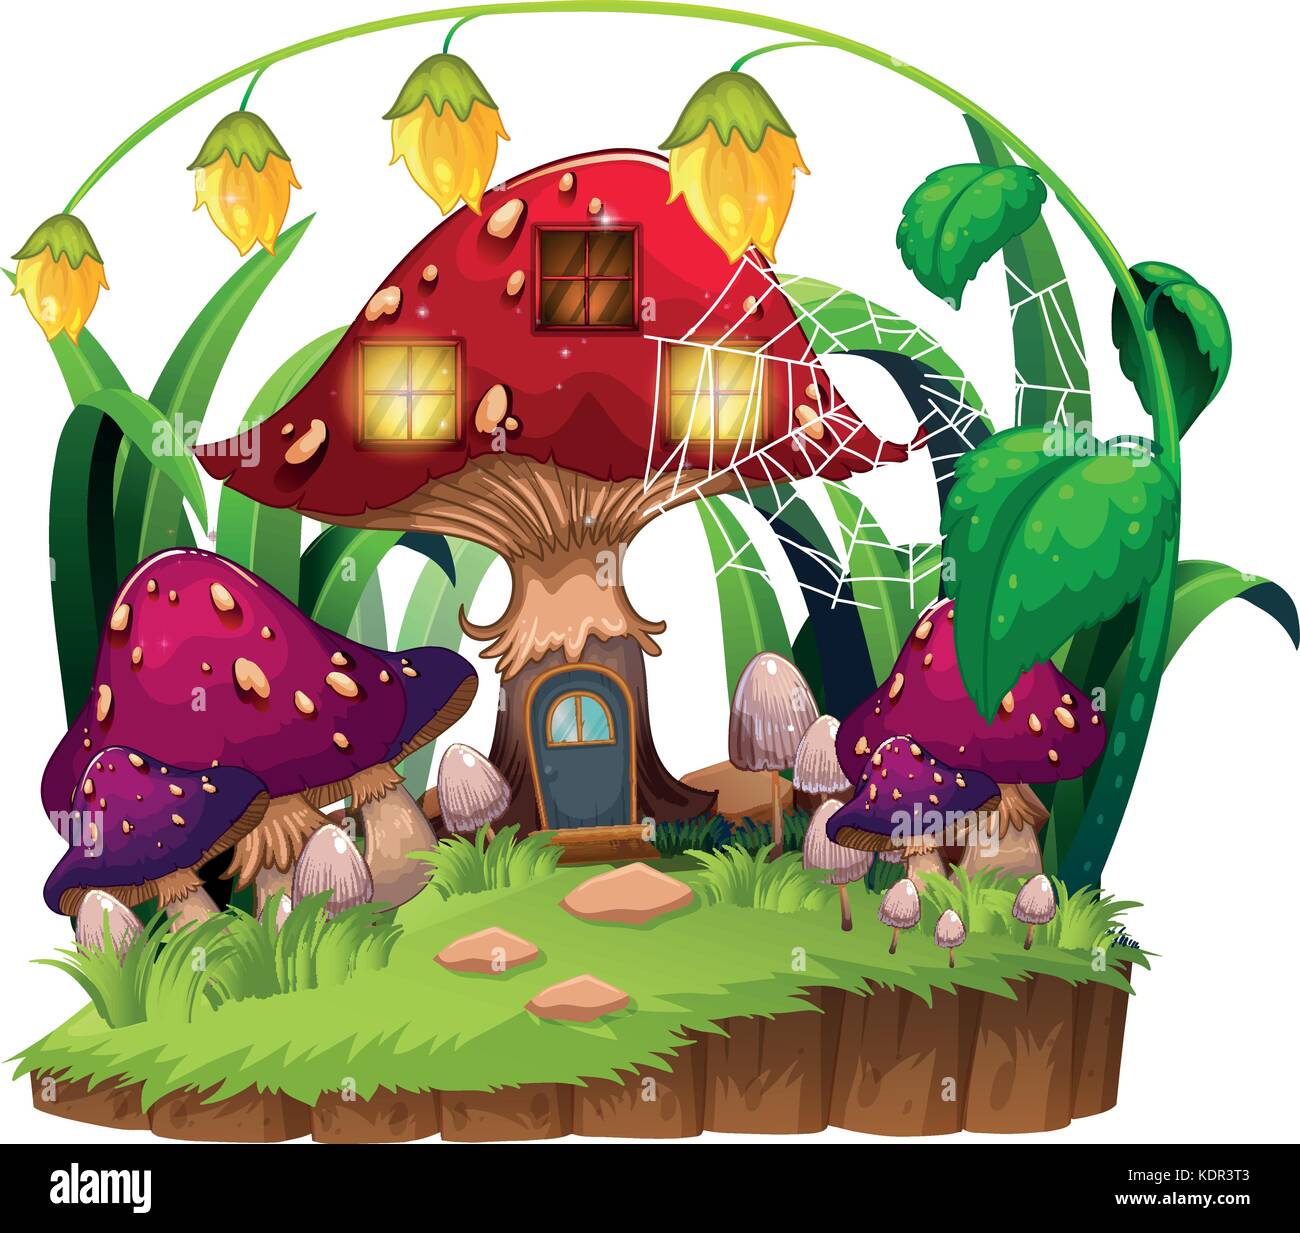 Mushroom House In Garden Illustration Stock Vector Image And Art Alamy 2144